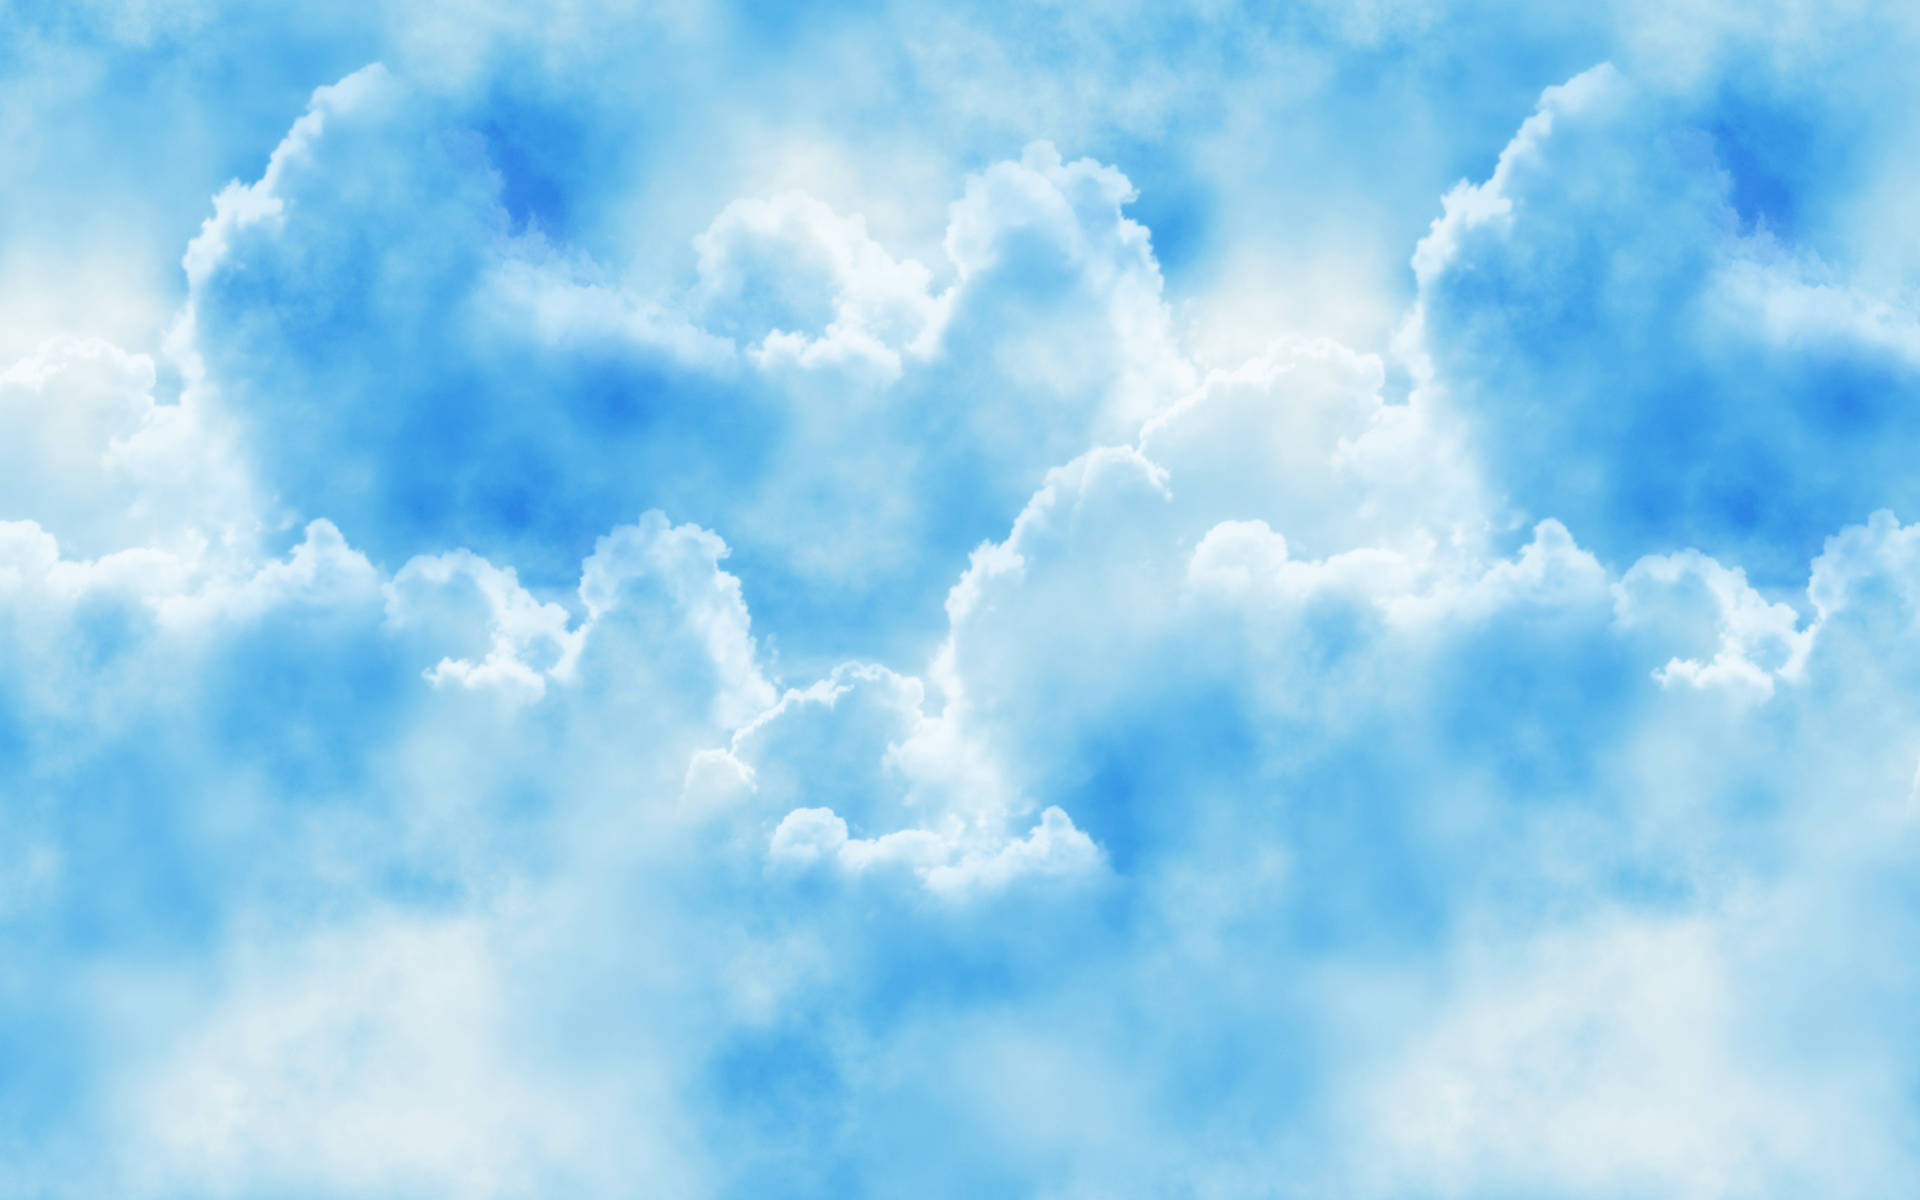 Painting-Like Blue Aesthetic Cloud Wallpaper